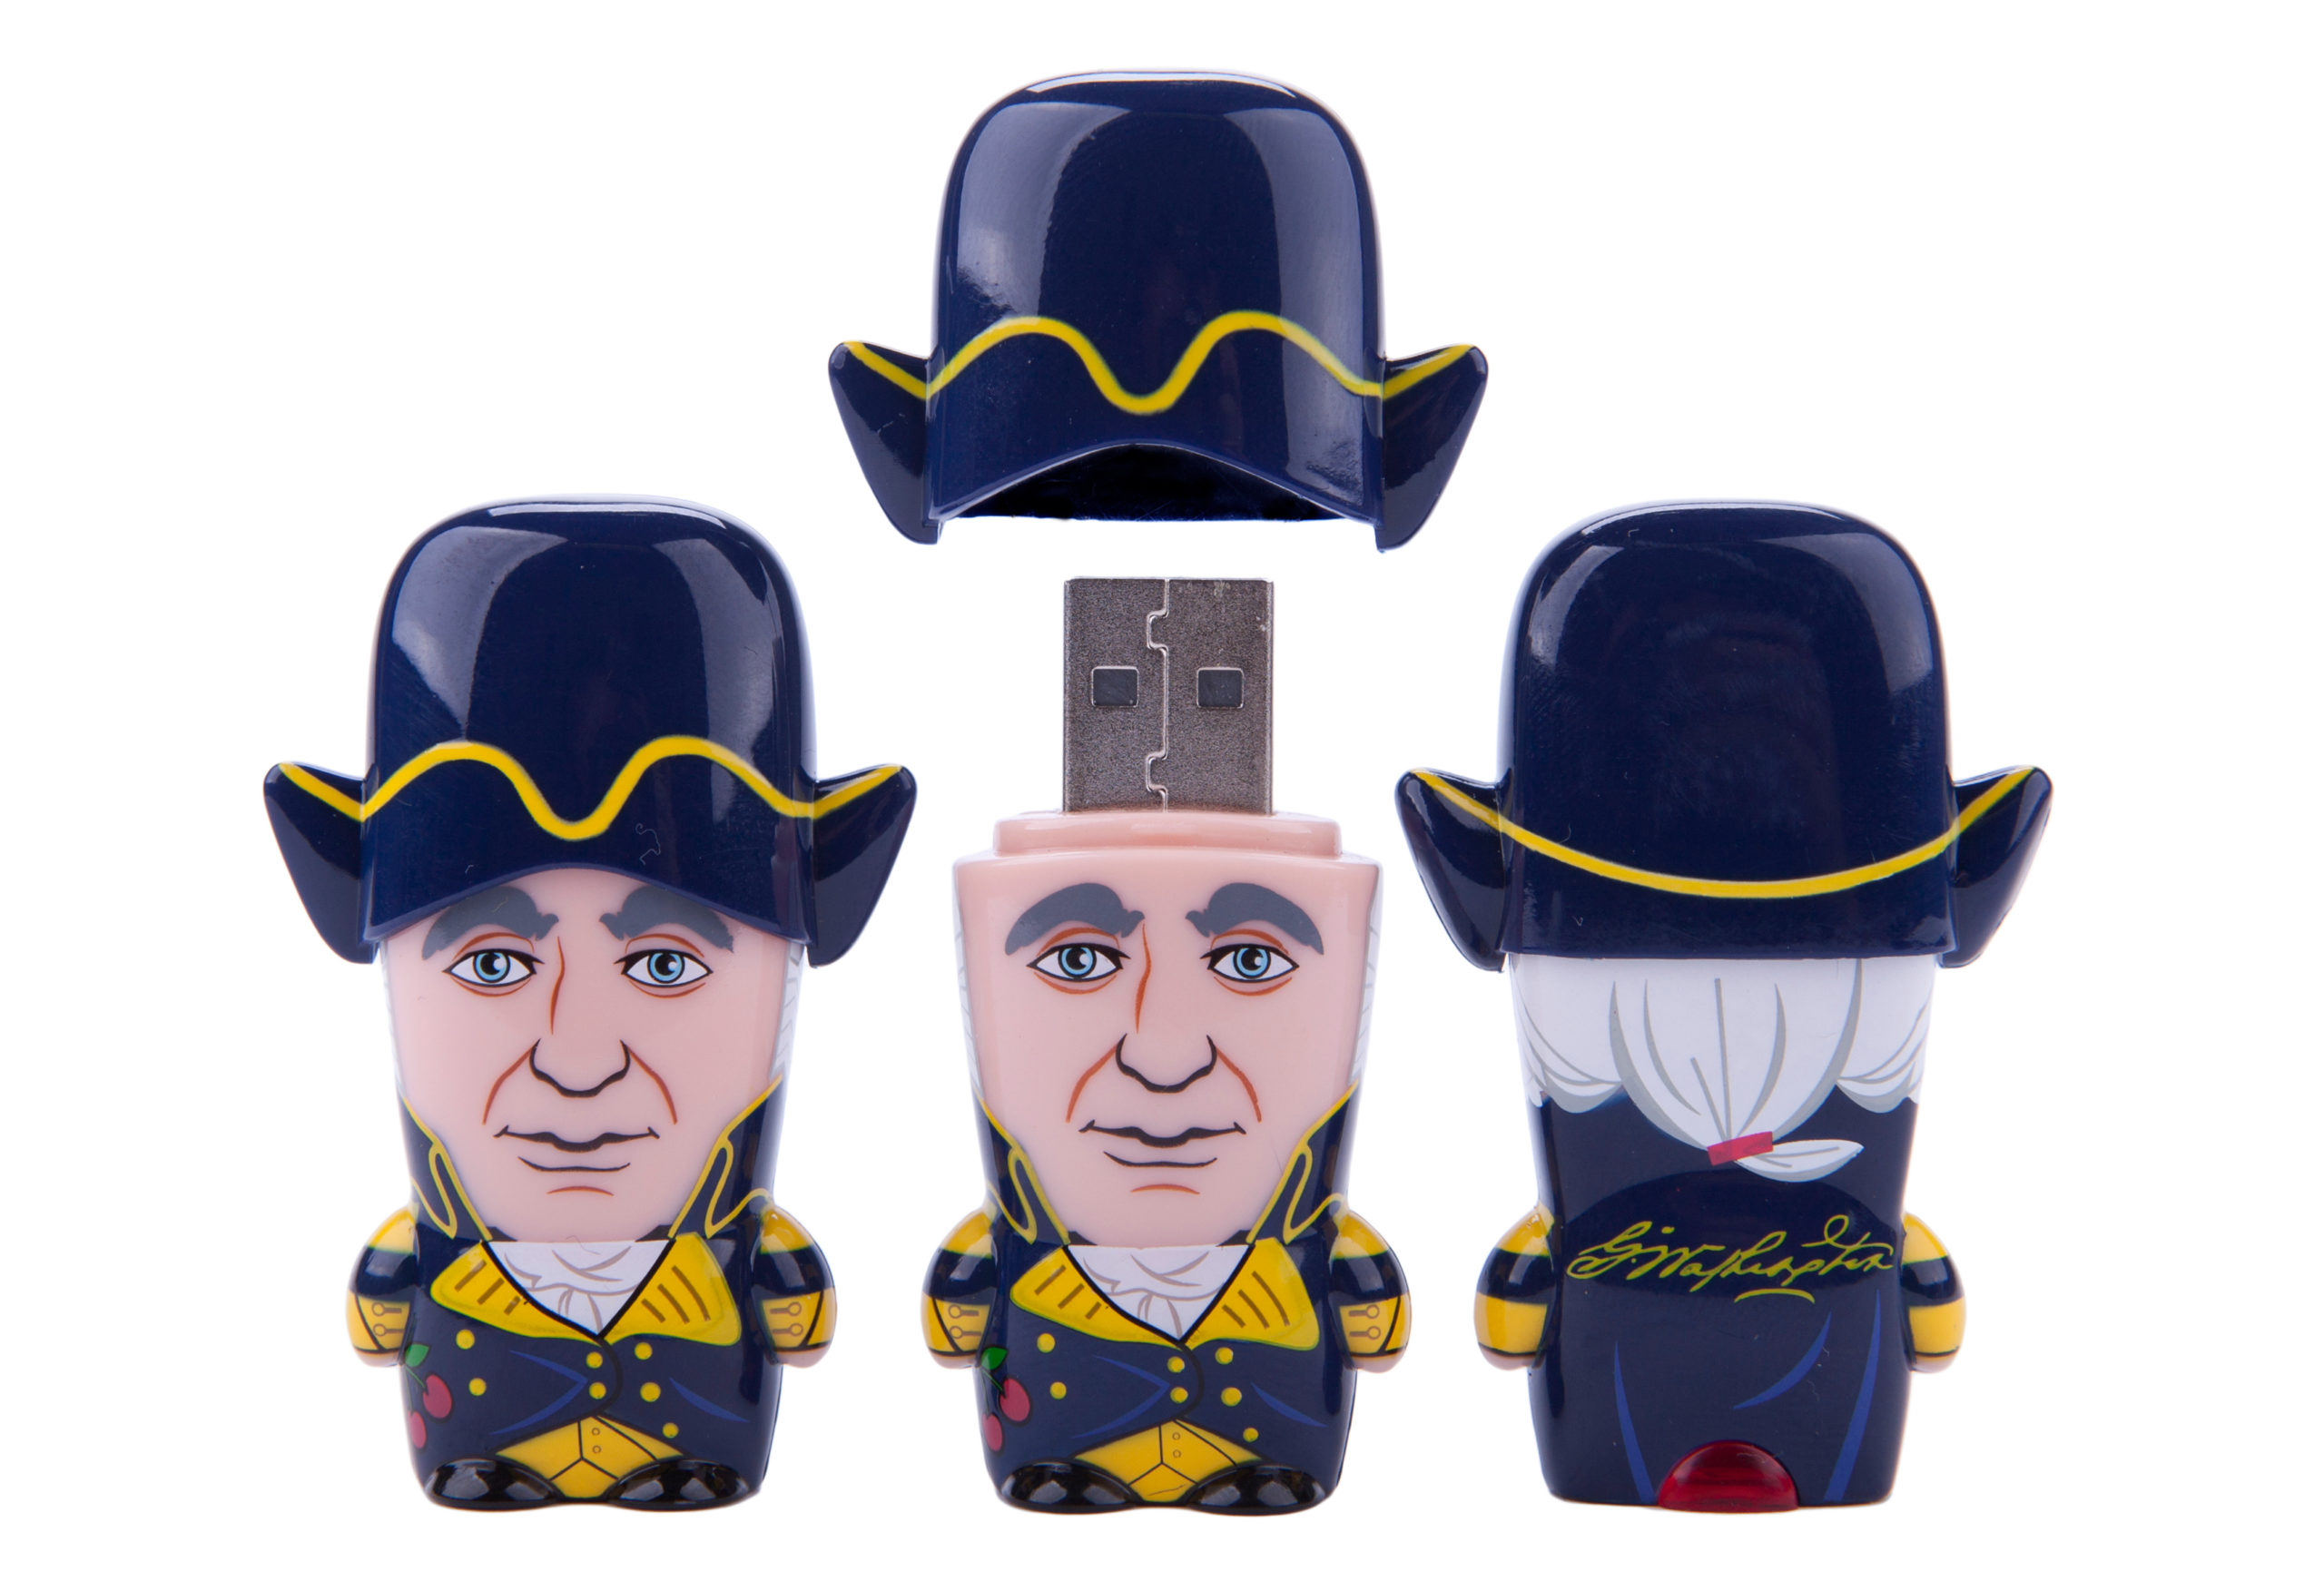 George Washington MIMOBOT USB flash drive for Mimoco